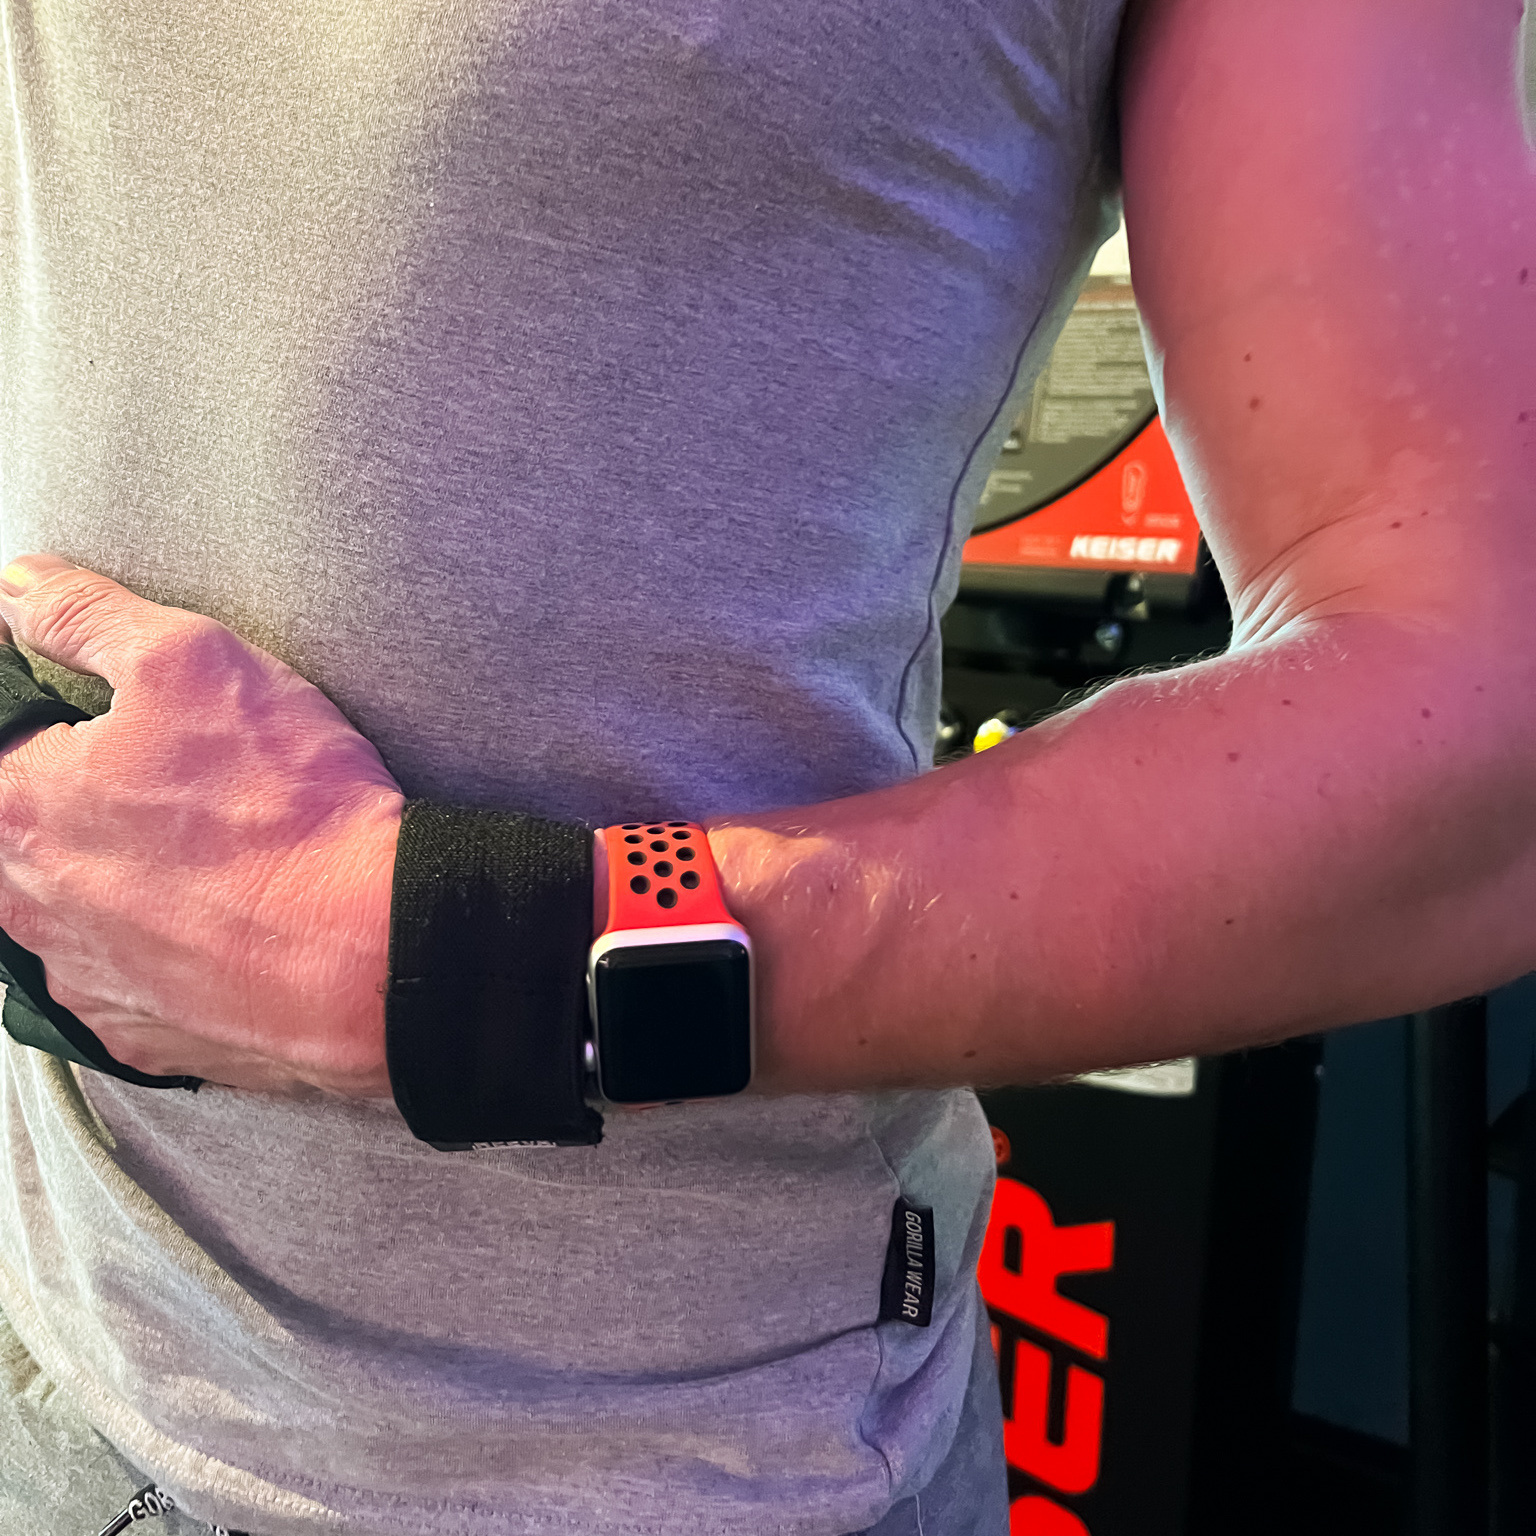  Apple Watch dupla sport szalag - piros fekete